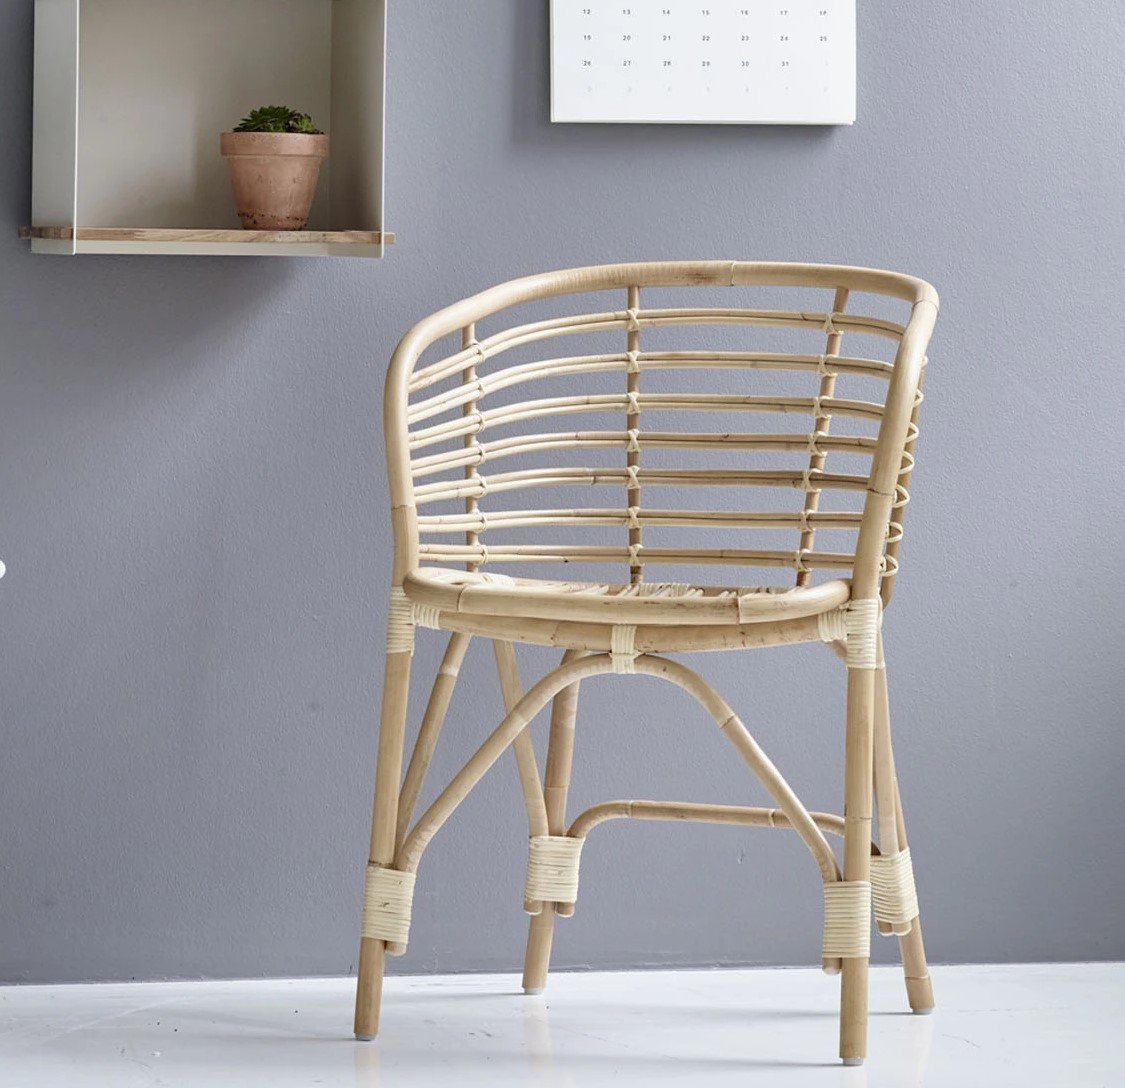 Blend Indoor Armchair from Cane-line, designed by Foersom & Hiort-Lorenzen MDD